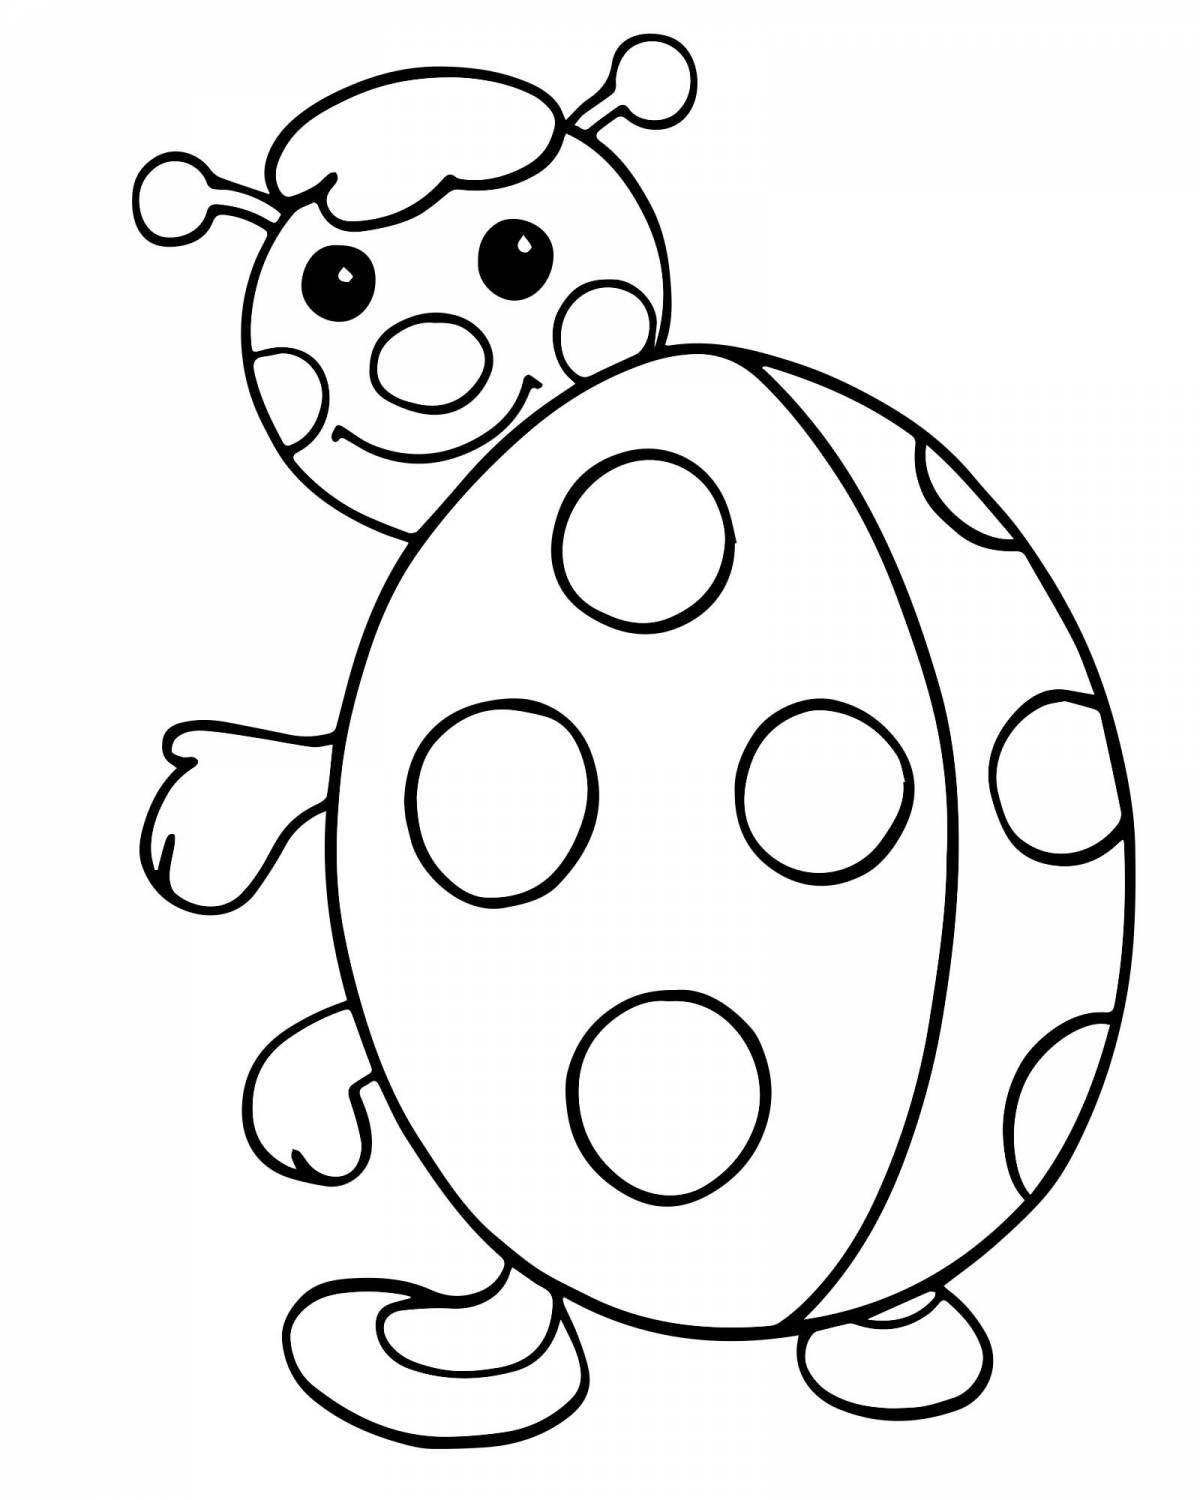 Glorious ladybug coloring for preschoolers